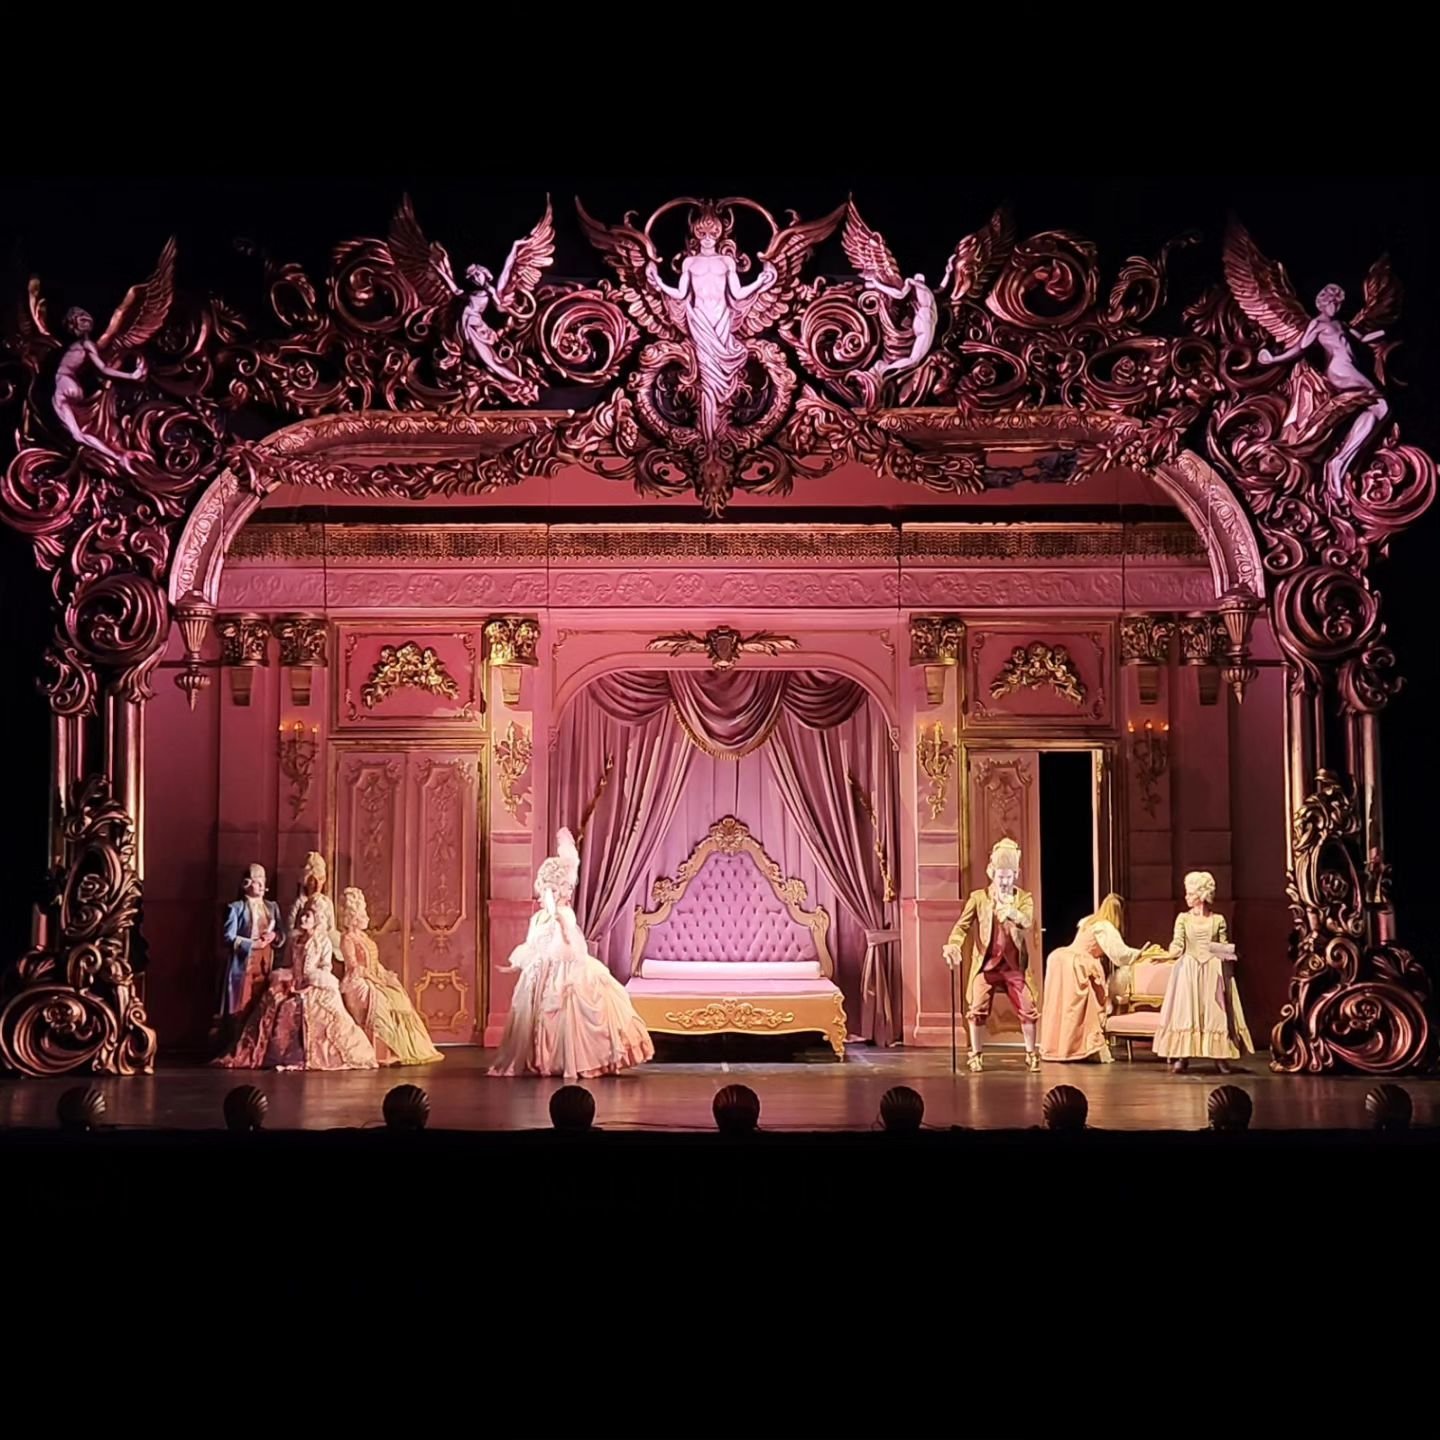 A scene from #ilmuto #phantomoftheopera last year on stage at the #nationaloperabucharest 

#baroque #gothic #poto #potoromania #setdesign #stagedesign #stagedesigner #scenografia #scenicdesign #scenography #b&uuml;hnenbild #opera #operadesign